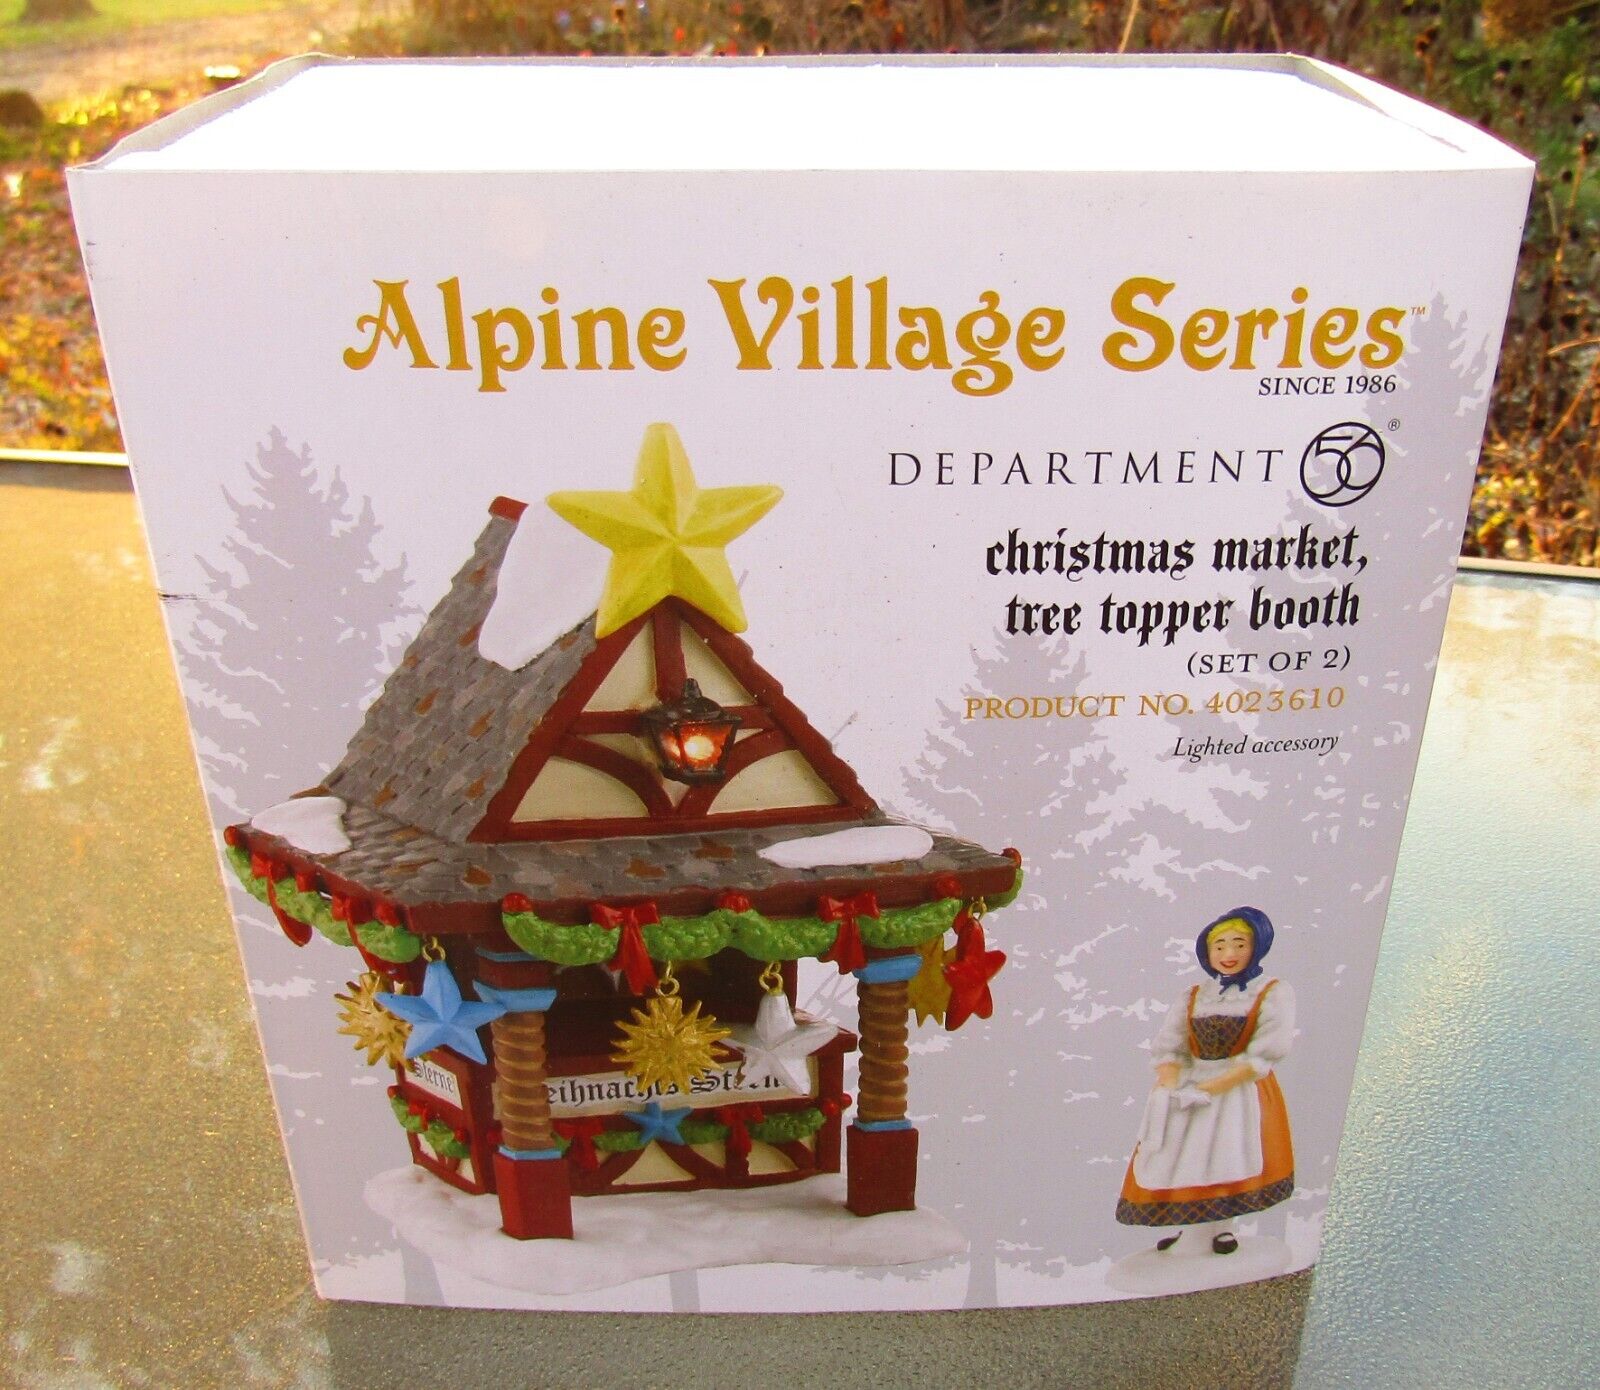 2011 Department 56 Alpine Village Christmas Market Tree Topper Booth UNUSED MISB